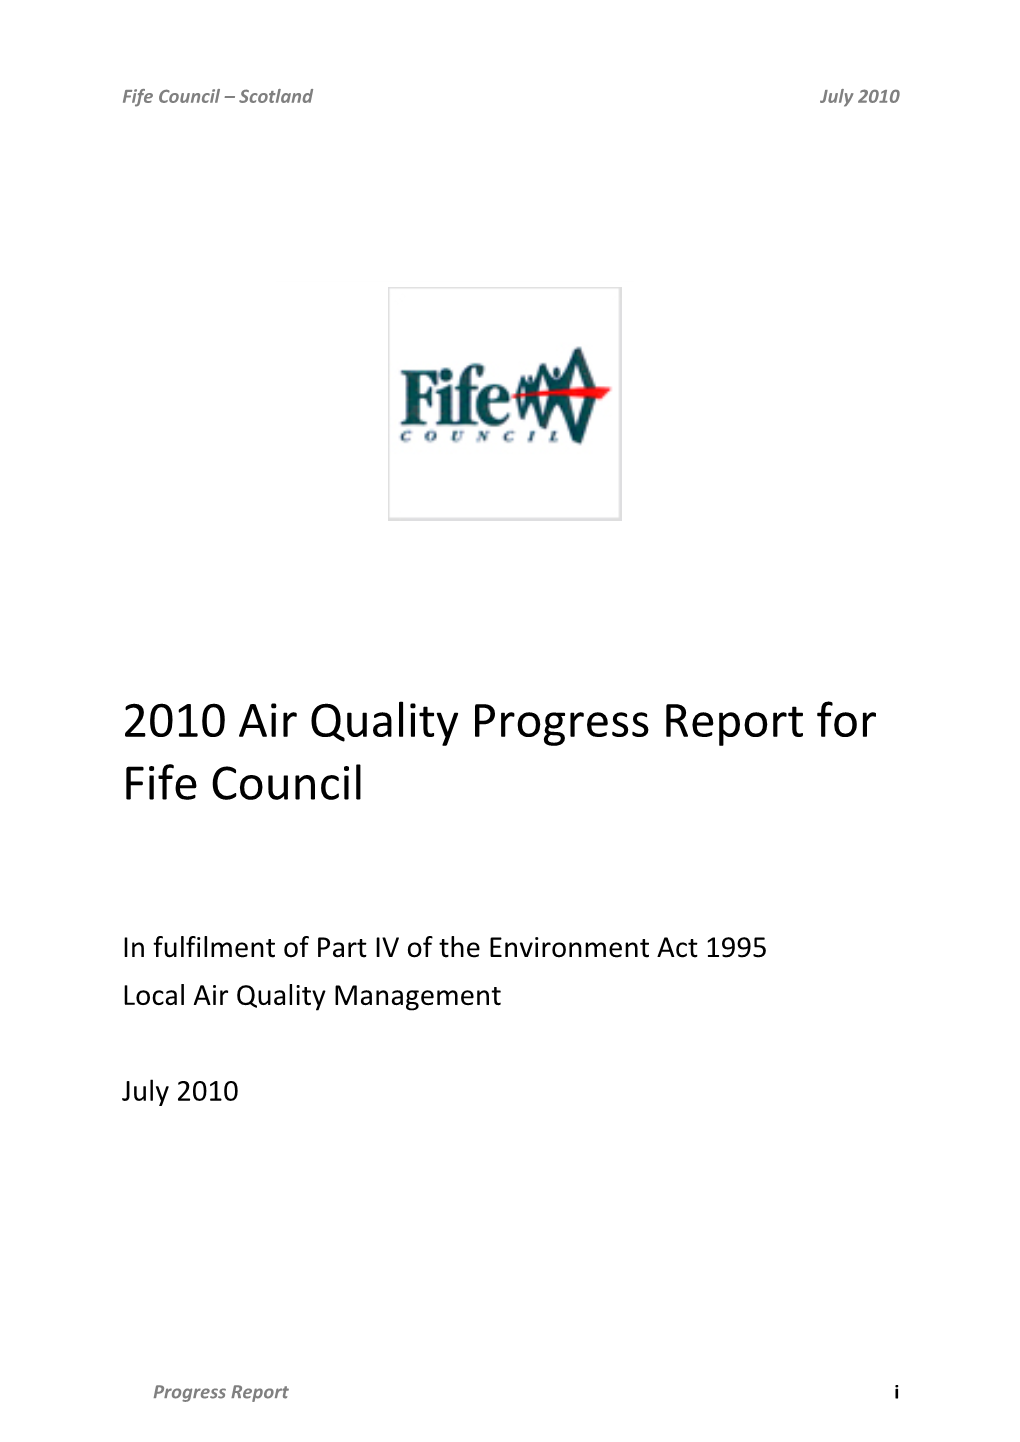 Progress Report 2010